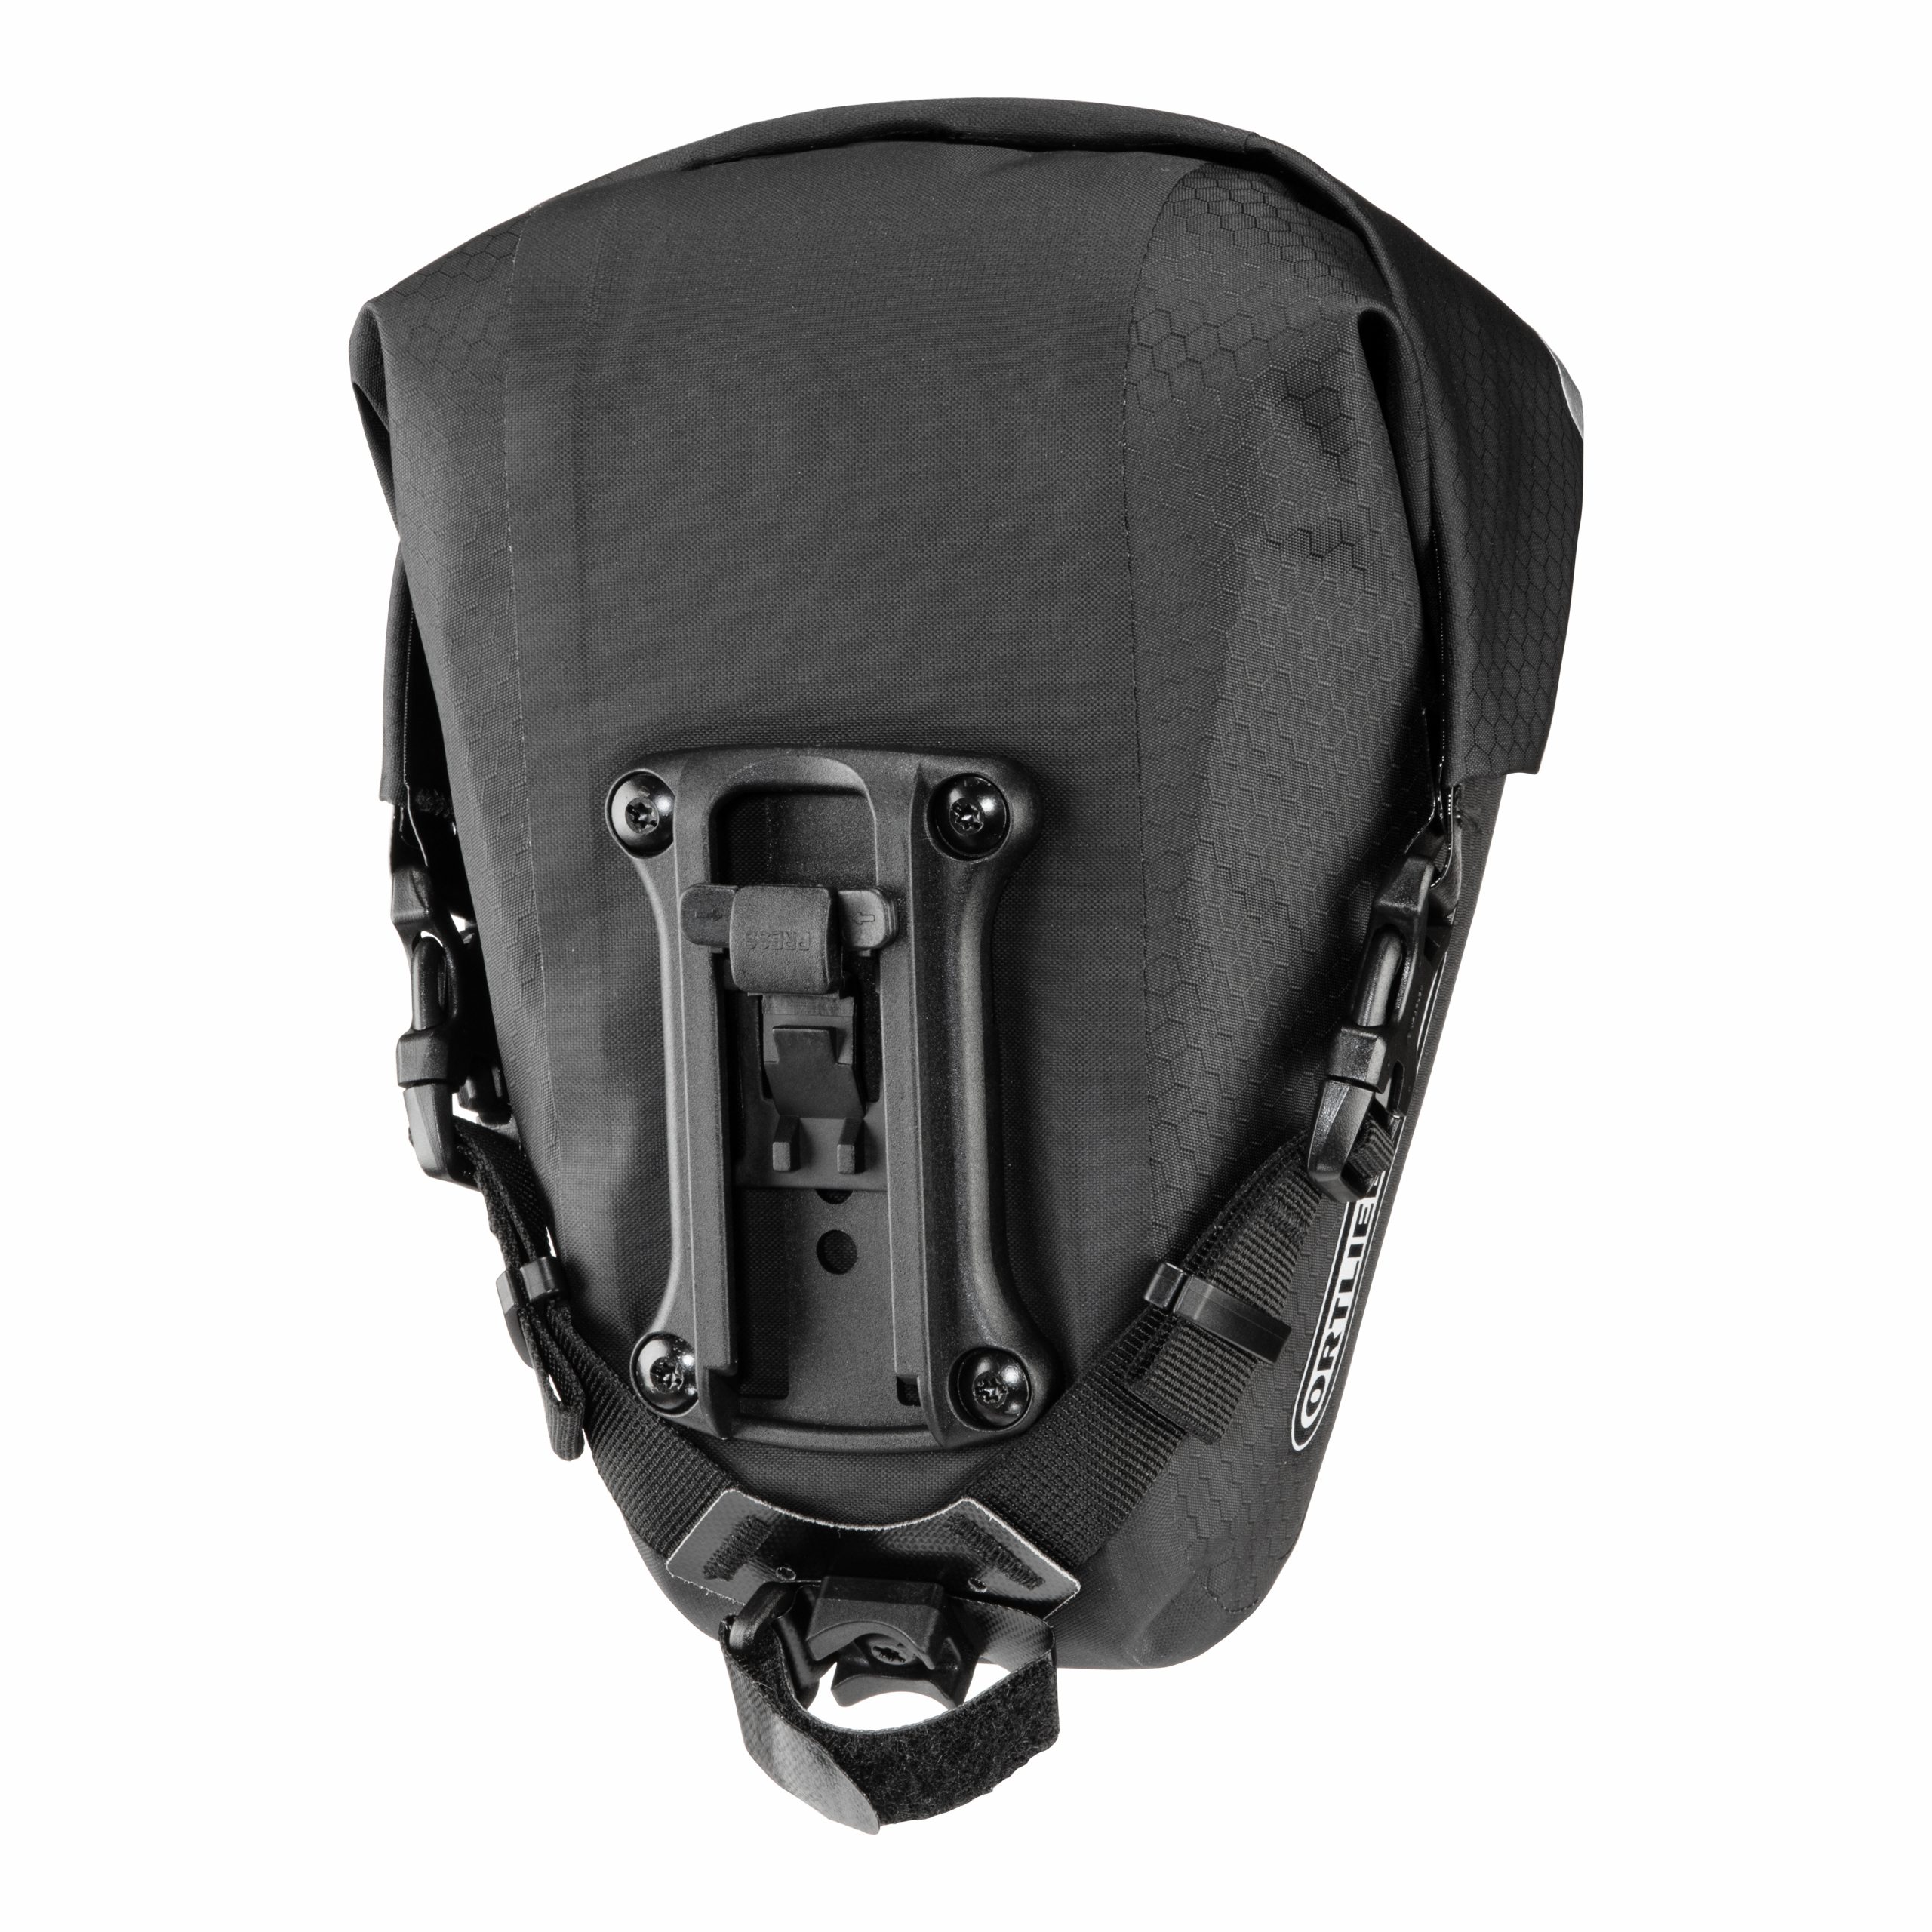 Ortlieb orbpsp02 bikepacking saddle bag f990202 limited edition seat